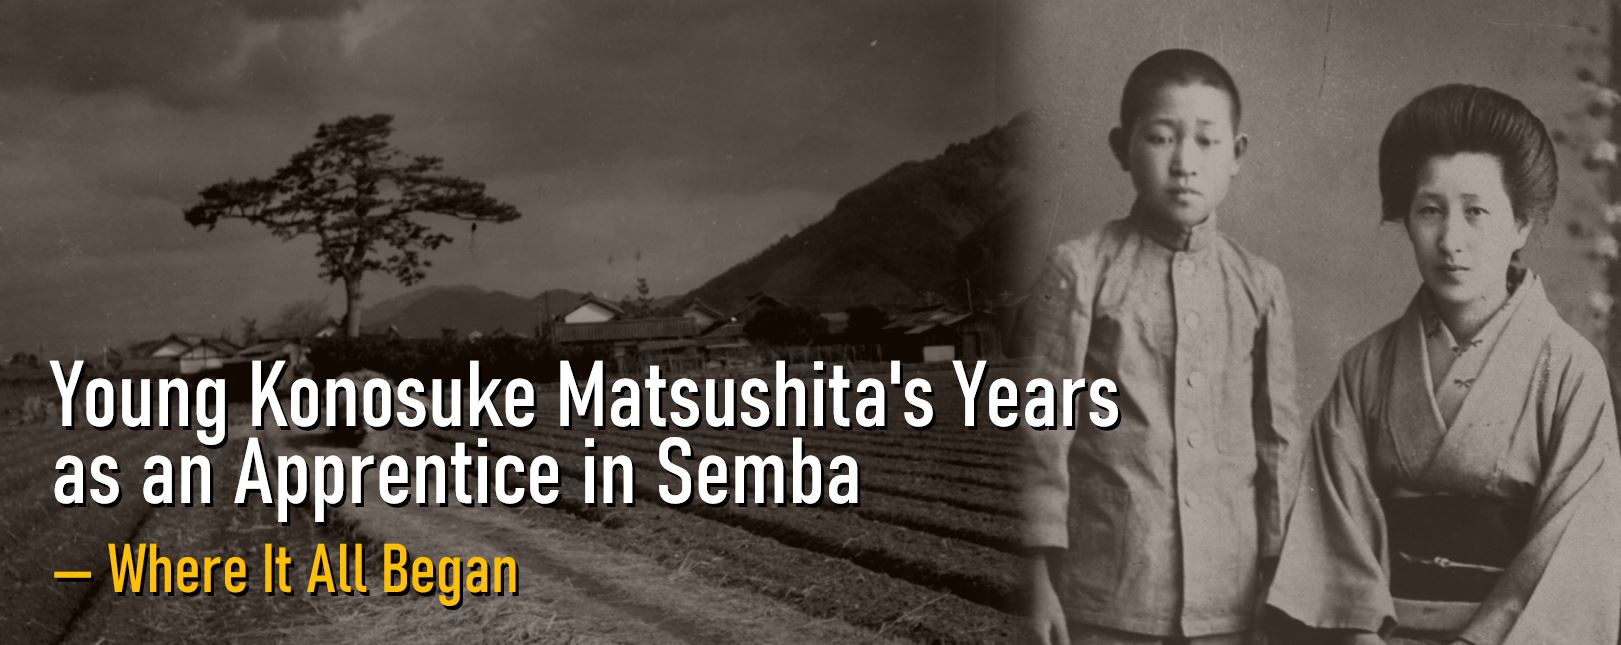 Young Konosuke Matsushita's Years as an Apprentice in Semba—Where It All Began